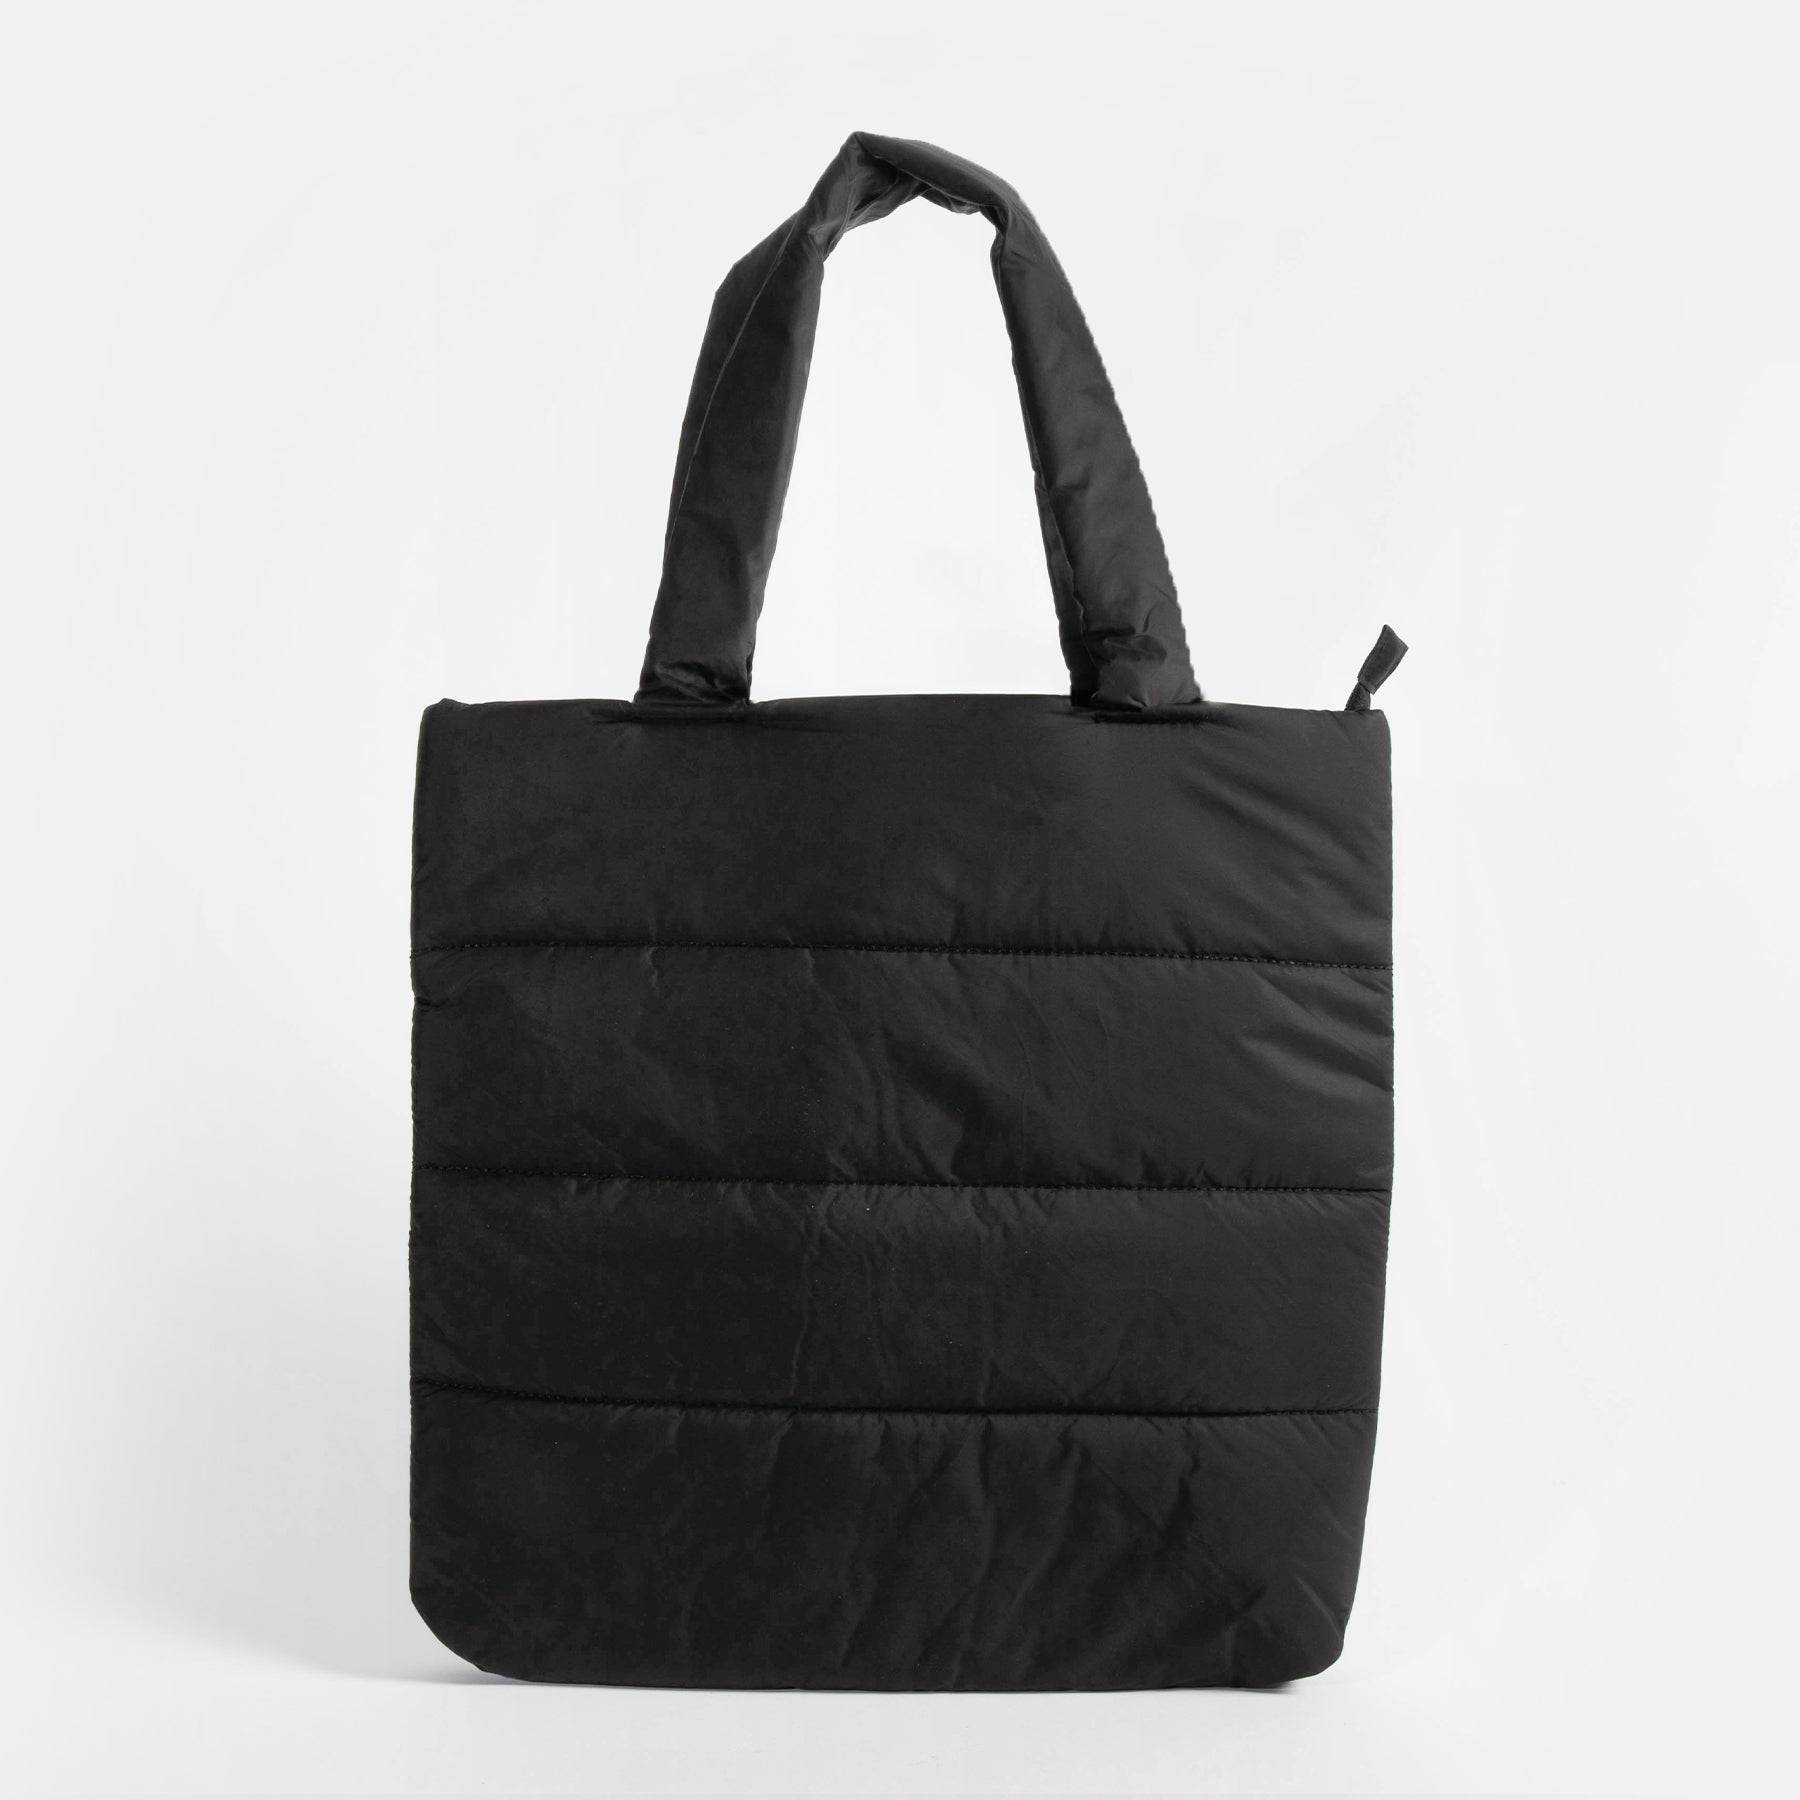 Authentic PRADA Vintage Nylon Handbag Purse Black Use on both sides | eBay